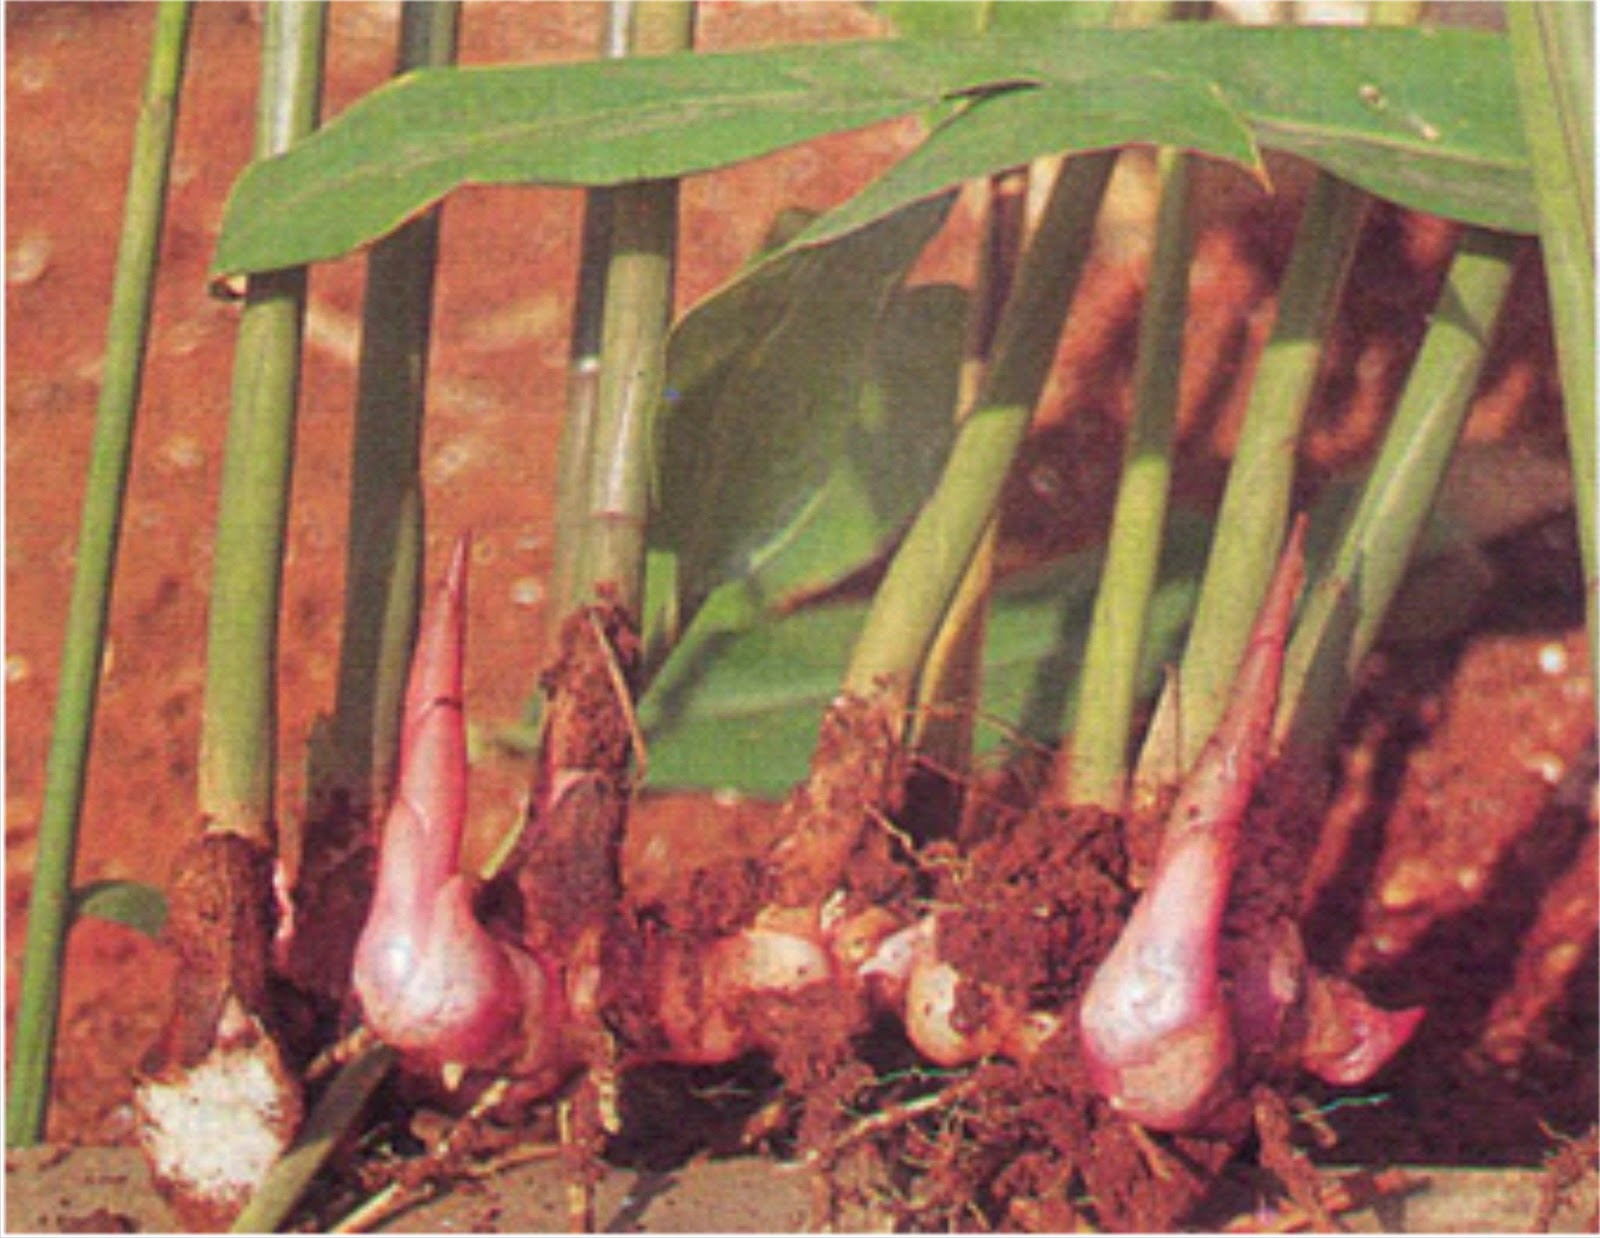  Tanaman ini di kenal juga dengan nama Laos ialah tumbuhan jenis umbi Manfaat Lengkuas Merah Untuk Kesehatan